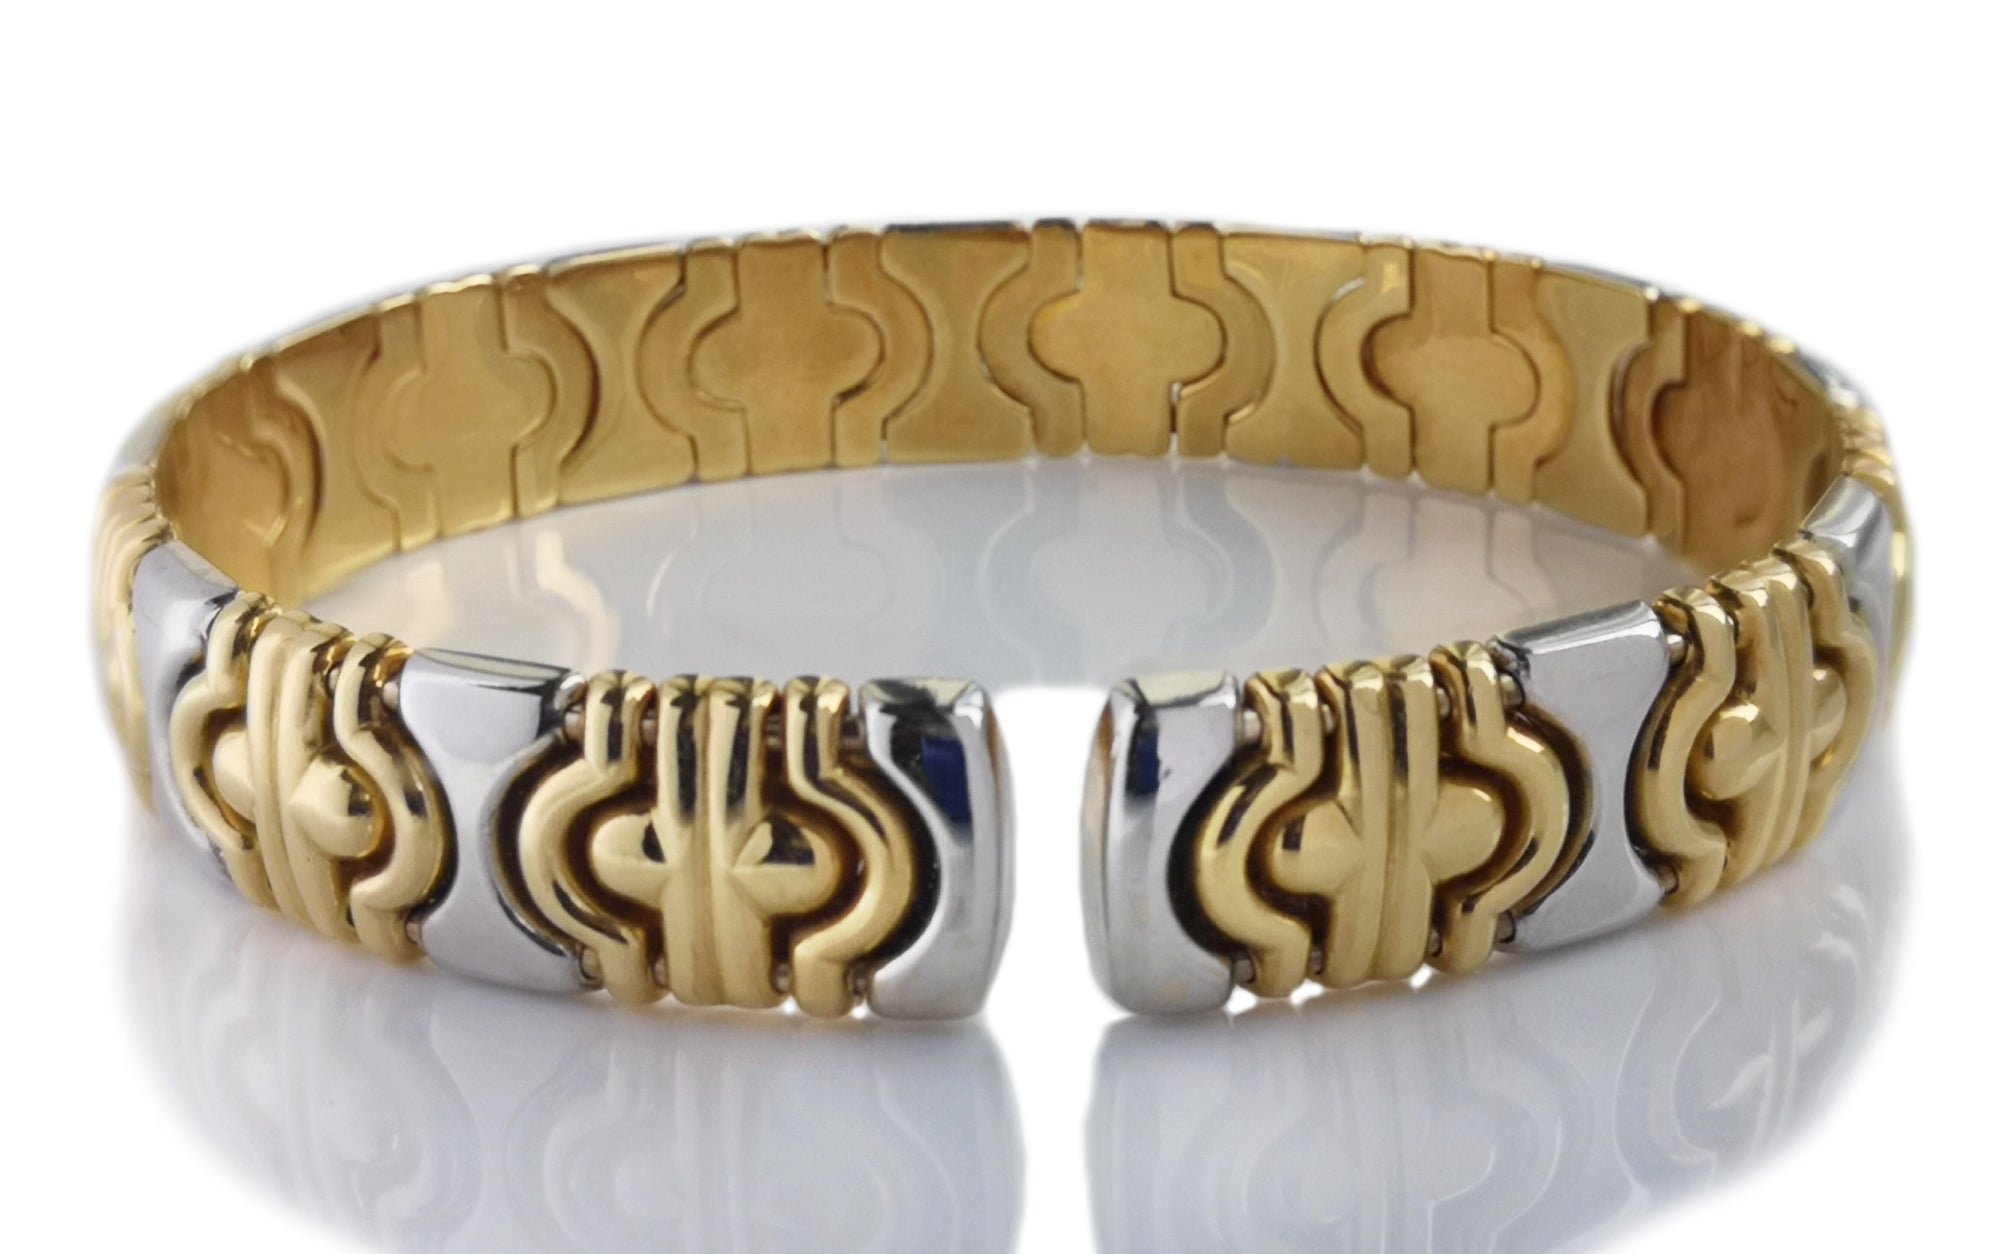 Bulgari Bvlgari 18k White Gold Charm Bracelet 7.75in - Bloomsbury Manor Ltd